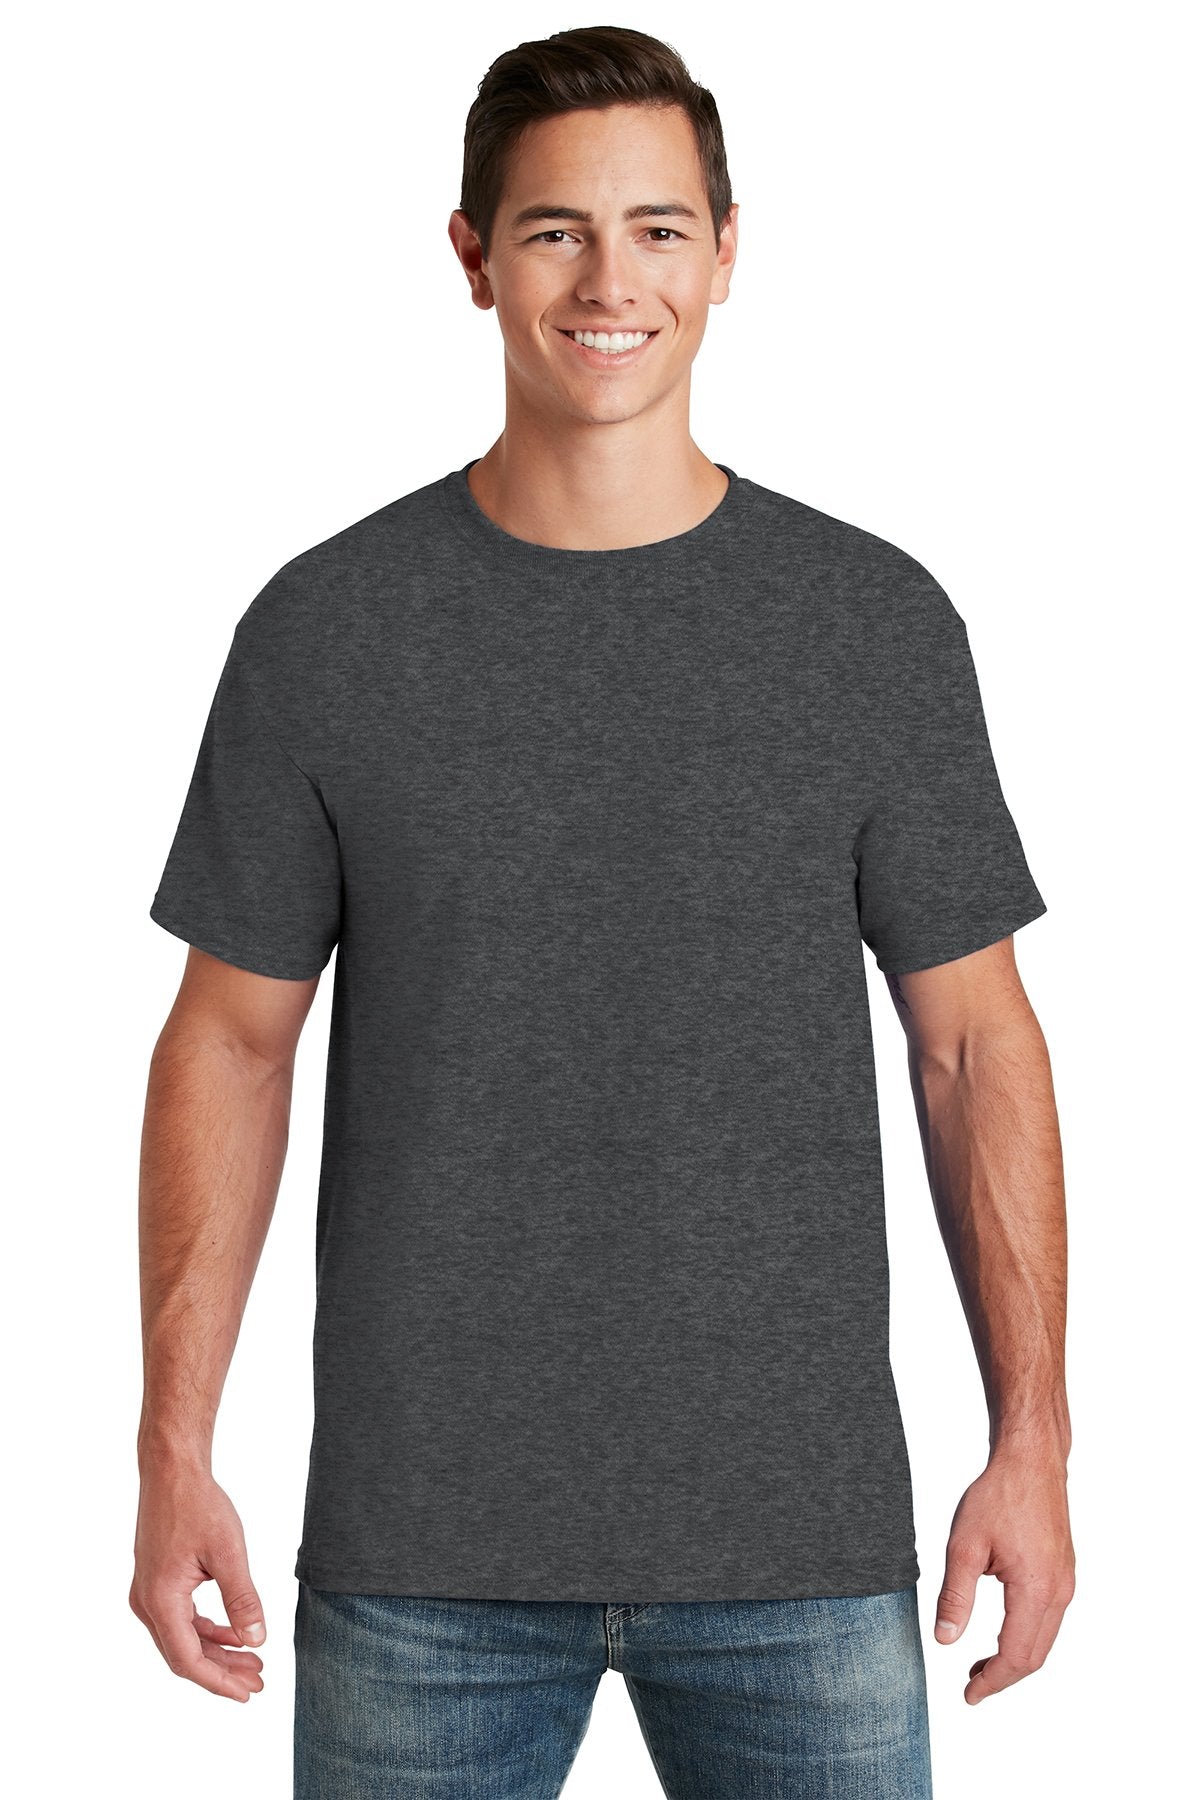 jerzees dri-power active 50/50 cotton/poly t-shirt 29m black heather